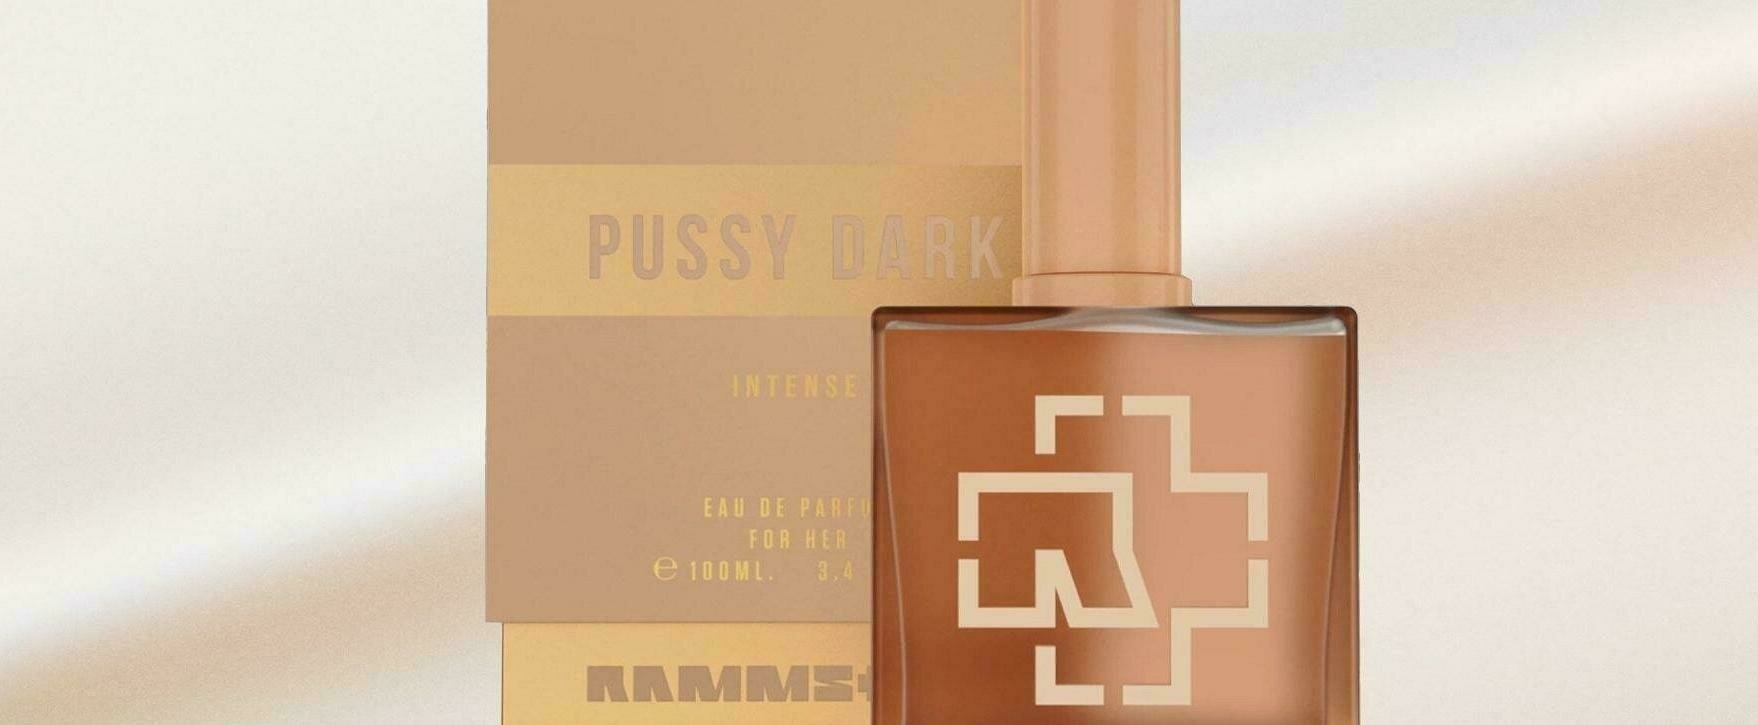 Sweet, Dark Seduction: The New Fragrance "Pussy Dark Intense" by Rammstein